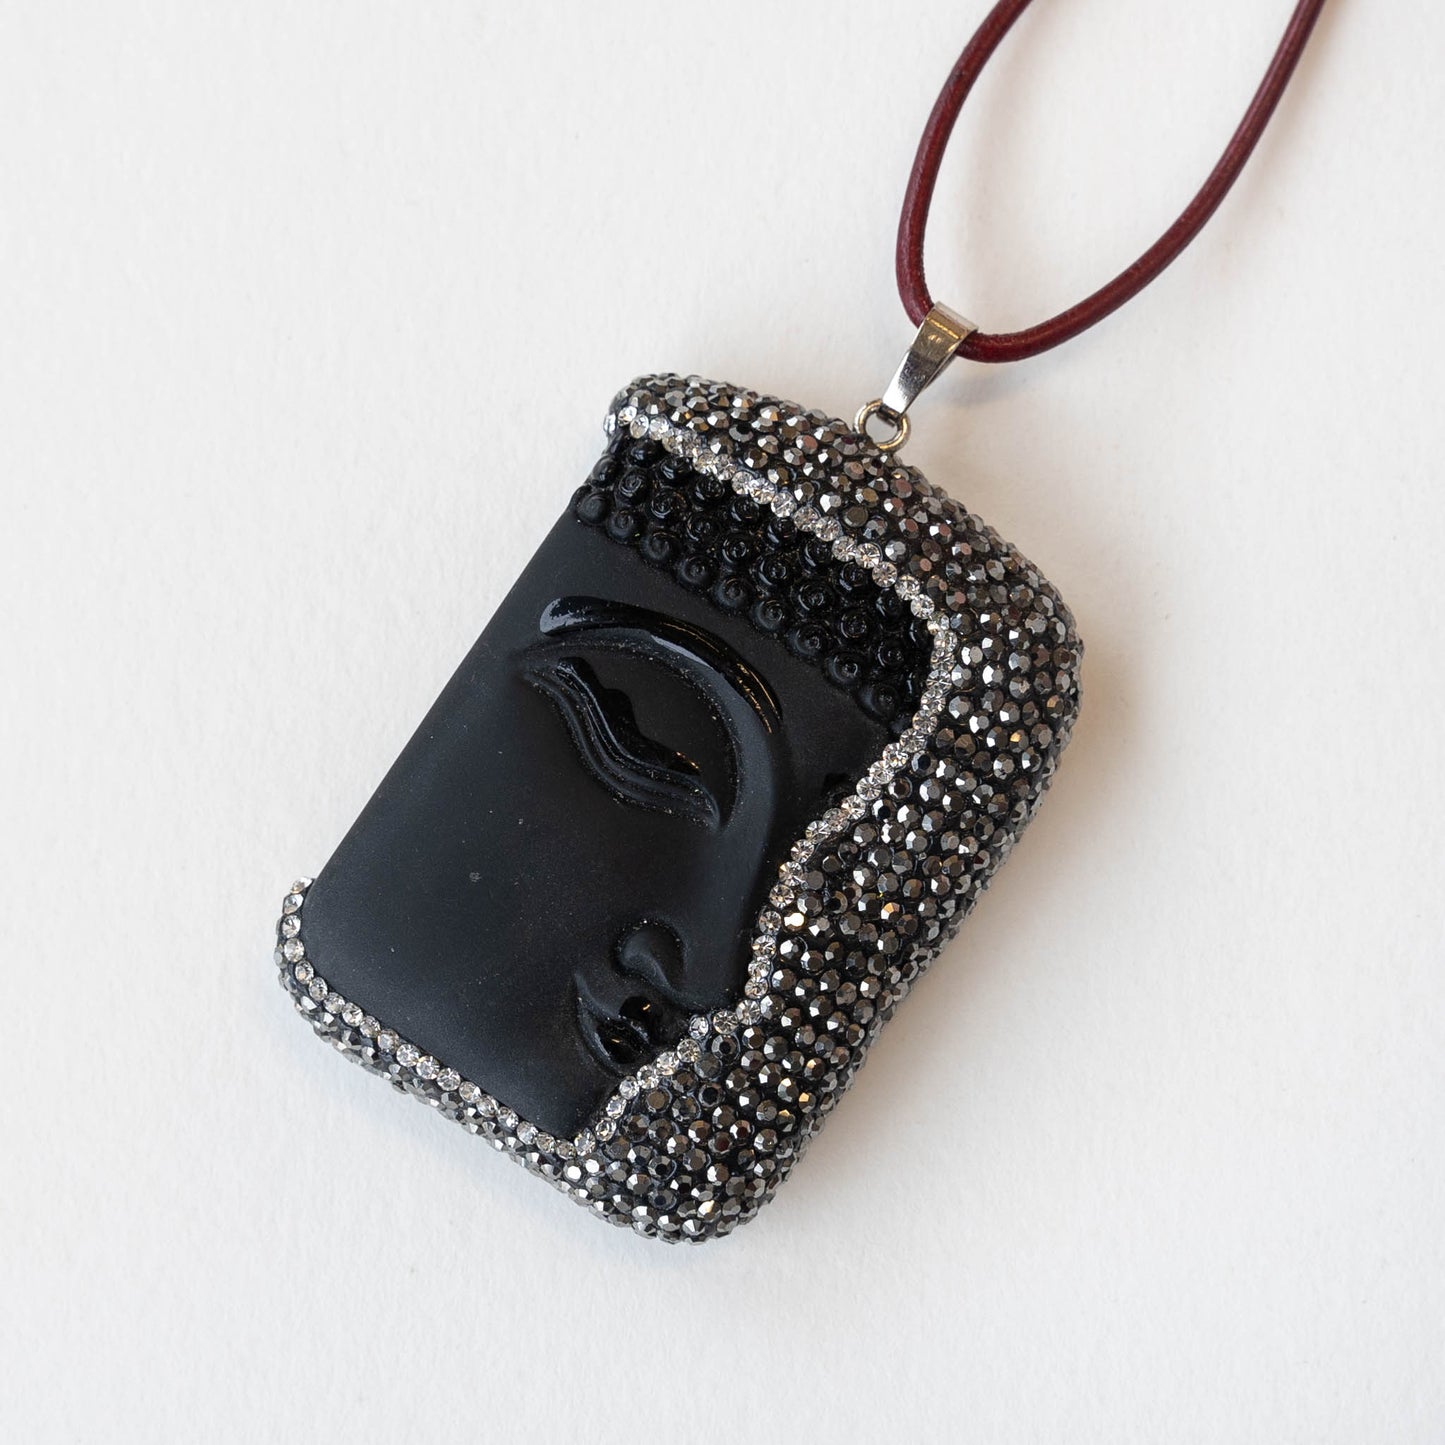 Blingy Peaceful Glass Buddha Pendant Bead - Black with Marcasite - 1 Pendant